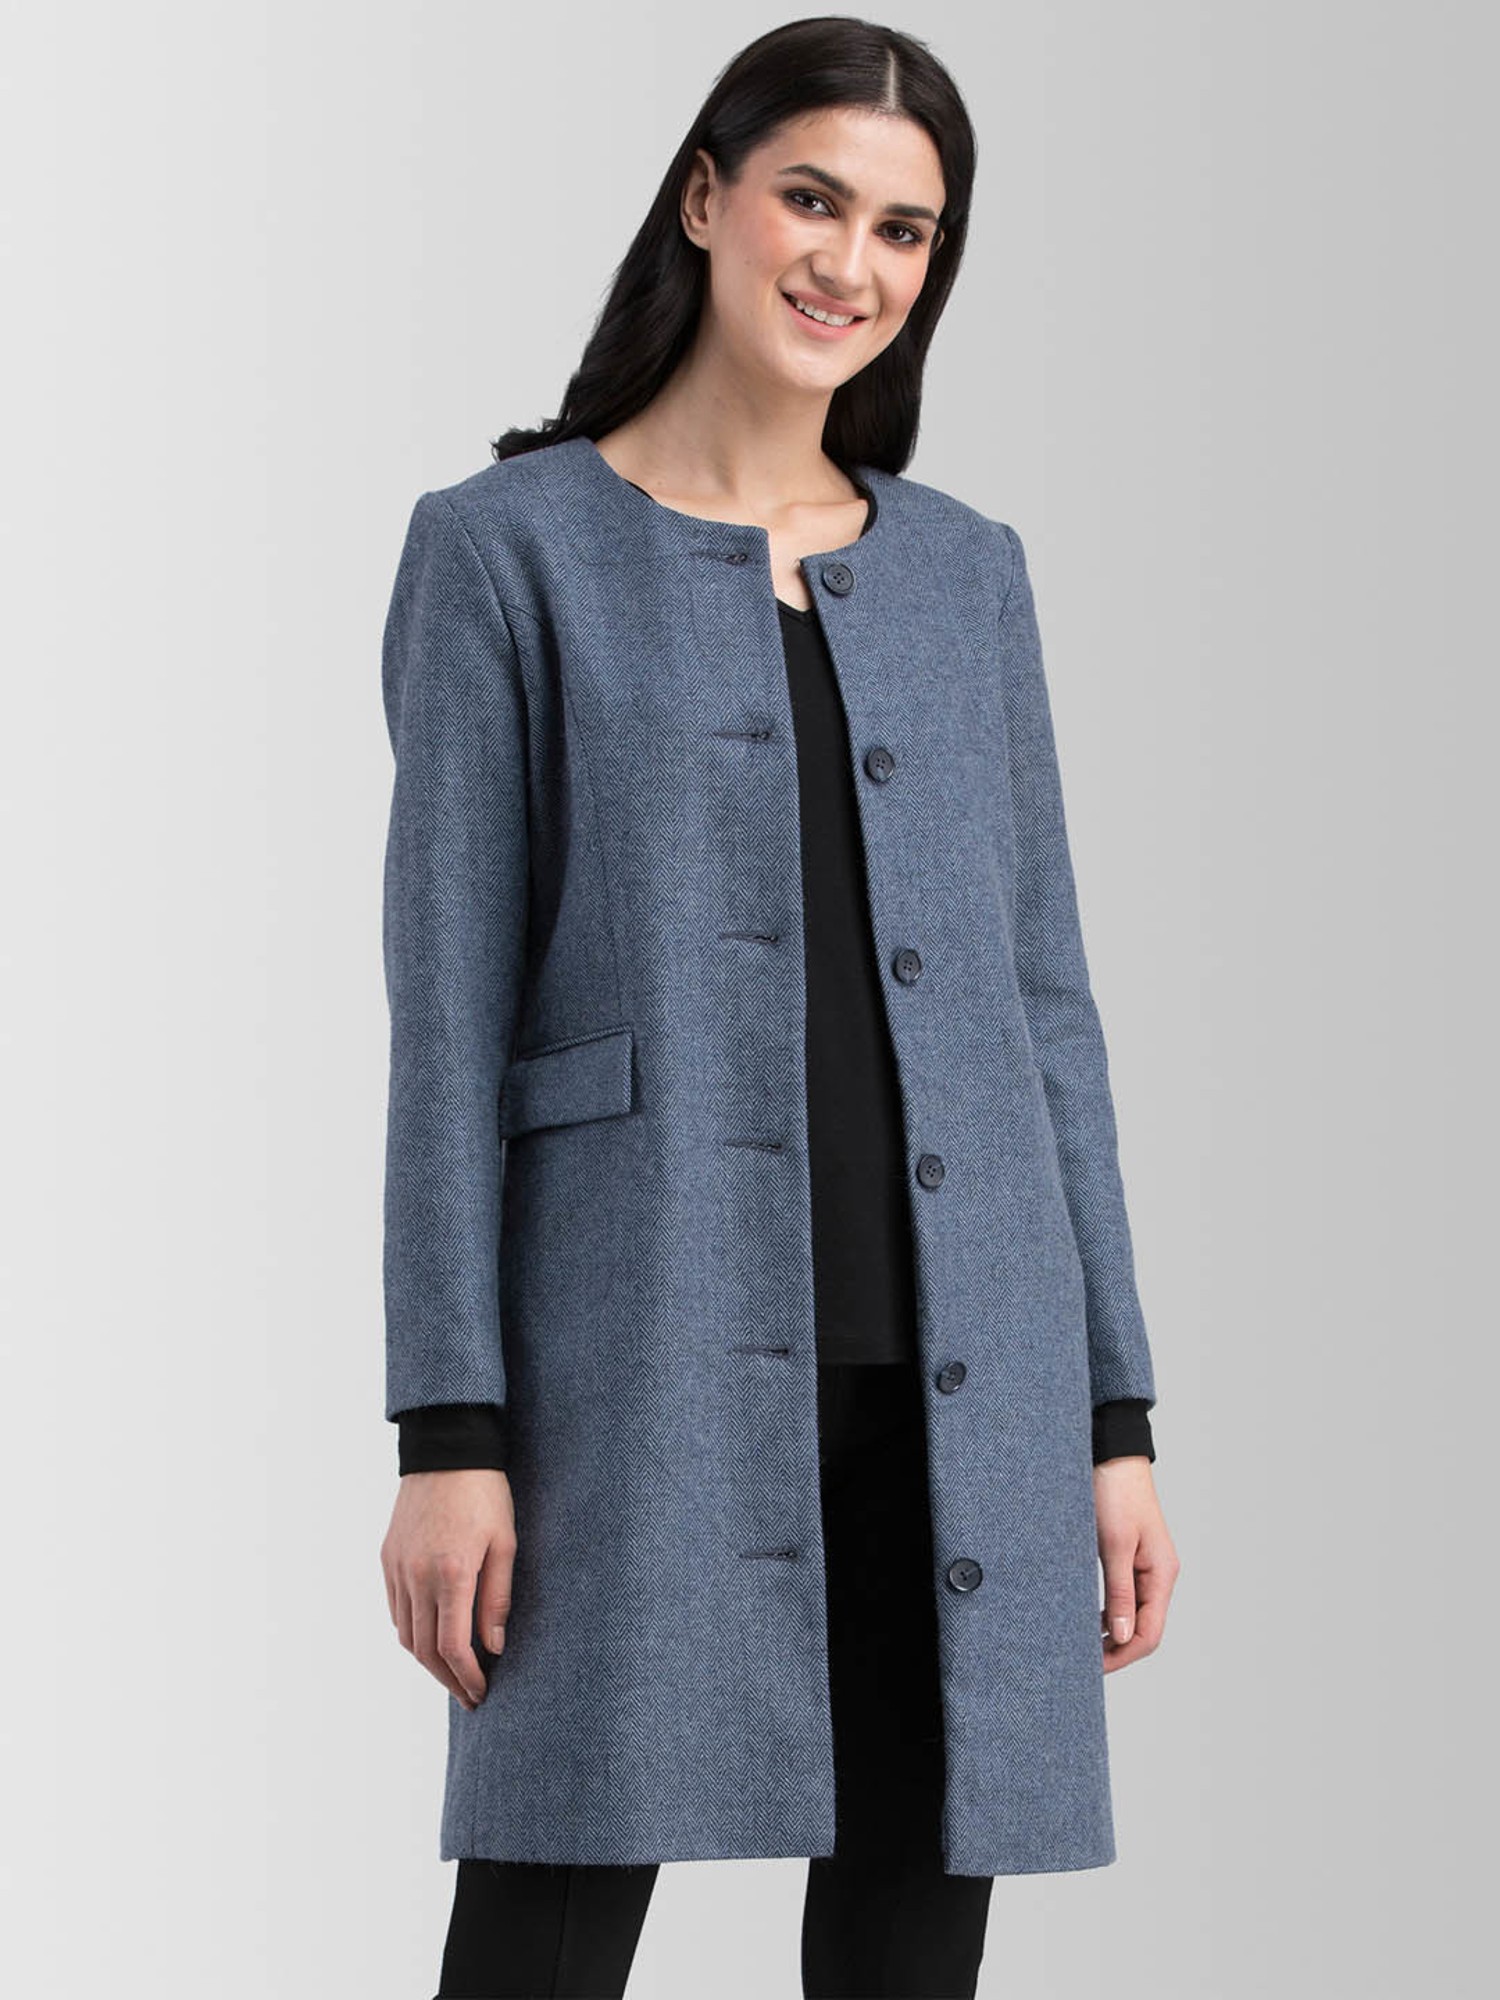 Women's Long Wool Coat in Navy